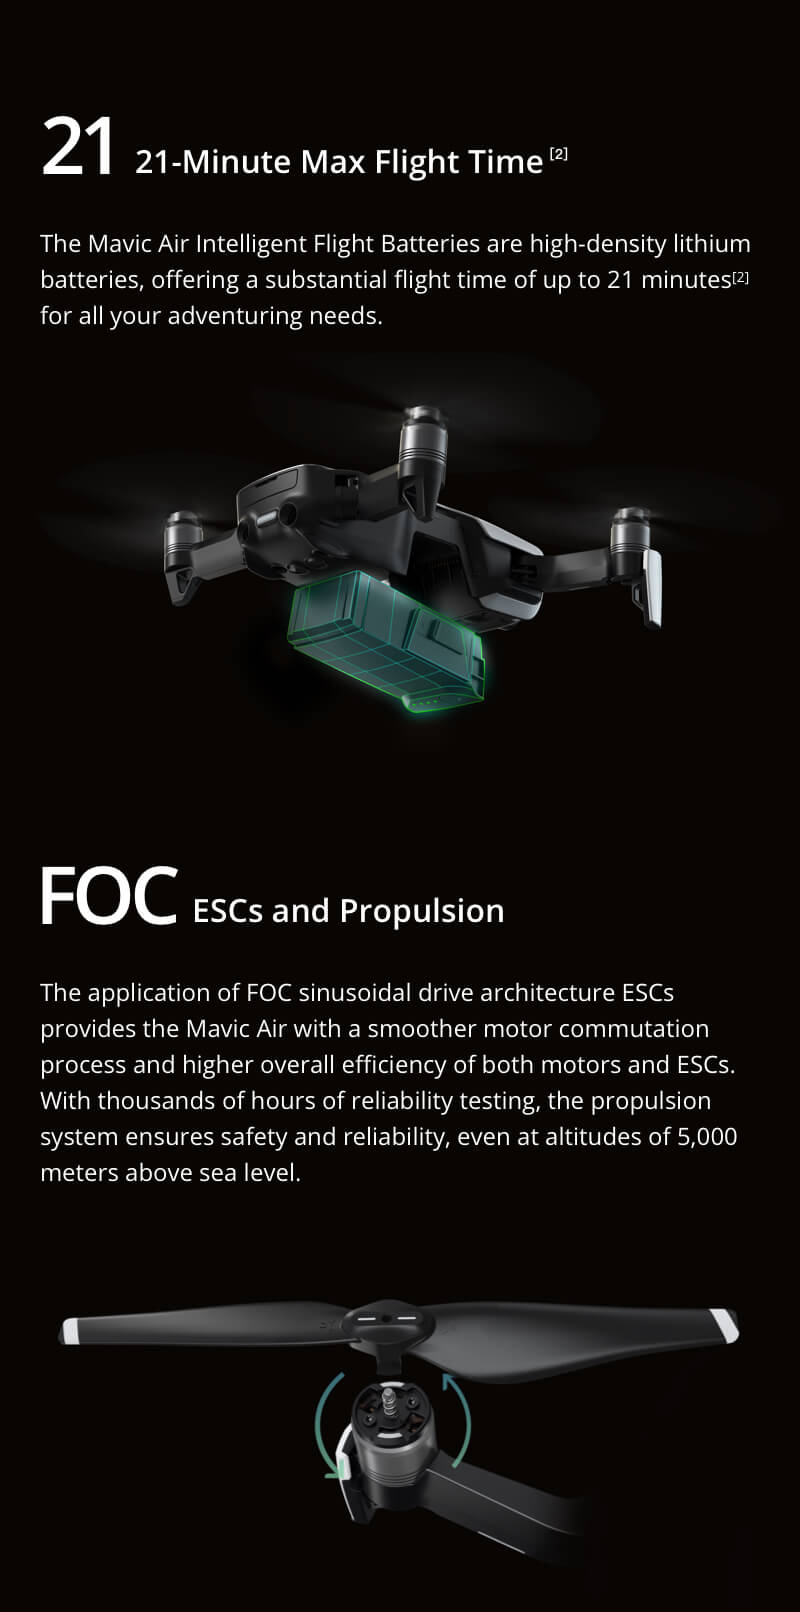 DJI-Mavic-Air-4KM-FPV-w-3-Axis-Gimbal-4K-Camera-32MP-Sphere-Panoramas-RC-Foldable-Drone-Quadcopter-1256616